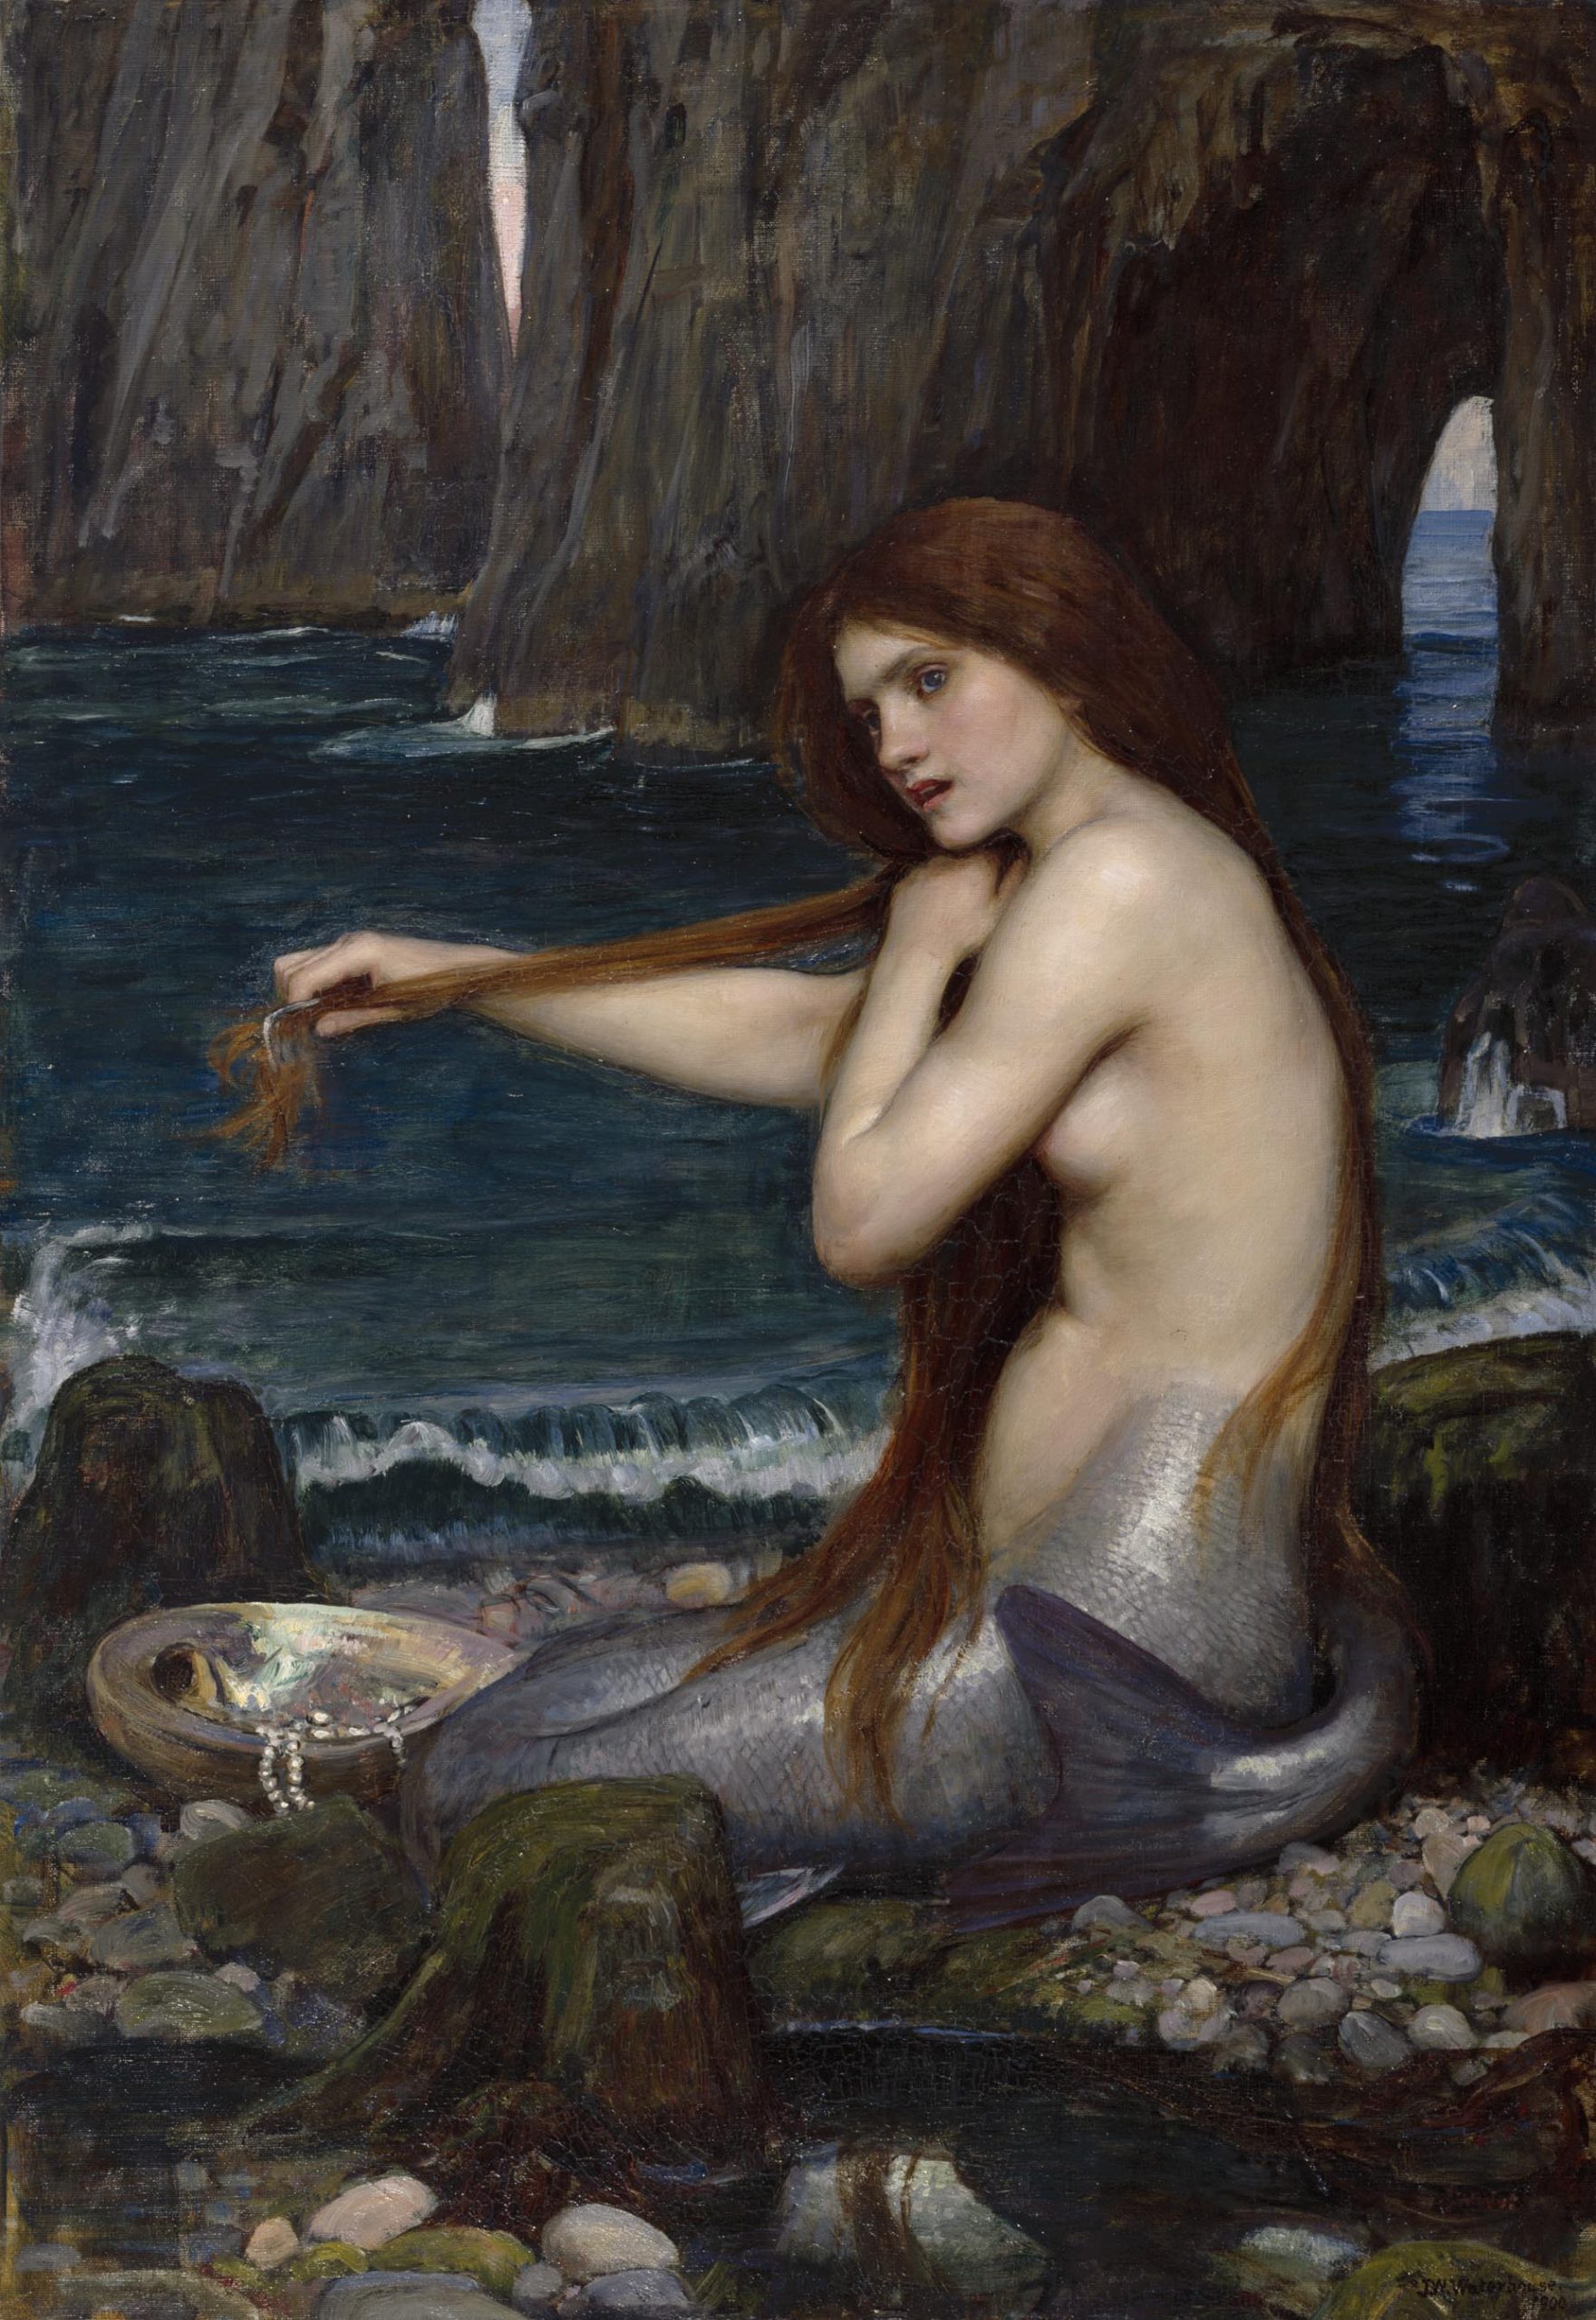 A mermaid running a comb through her hair on a rocky seashore